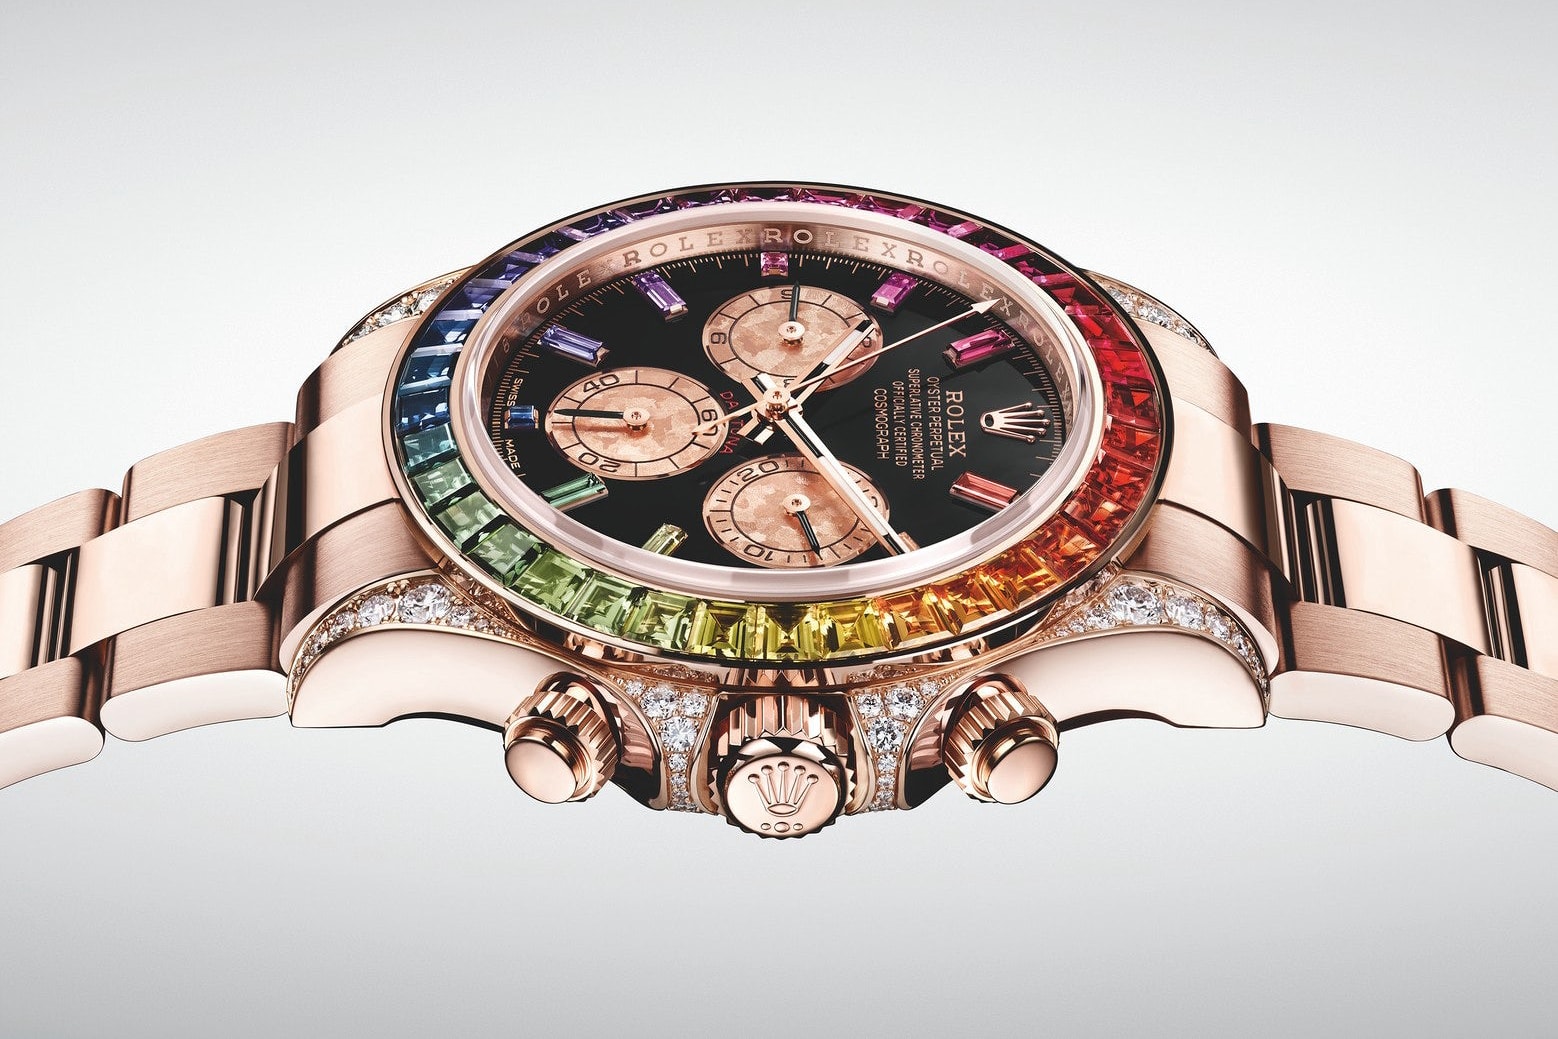 Rolex Rainbow Daytona Everose Gold Ref 116595 release date info drop watch